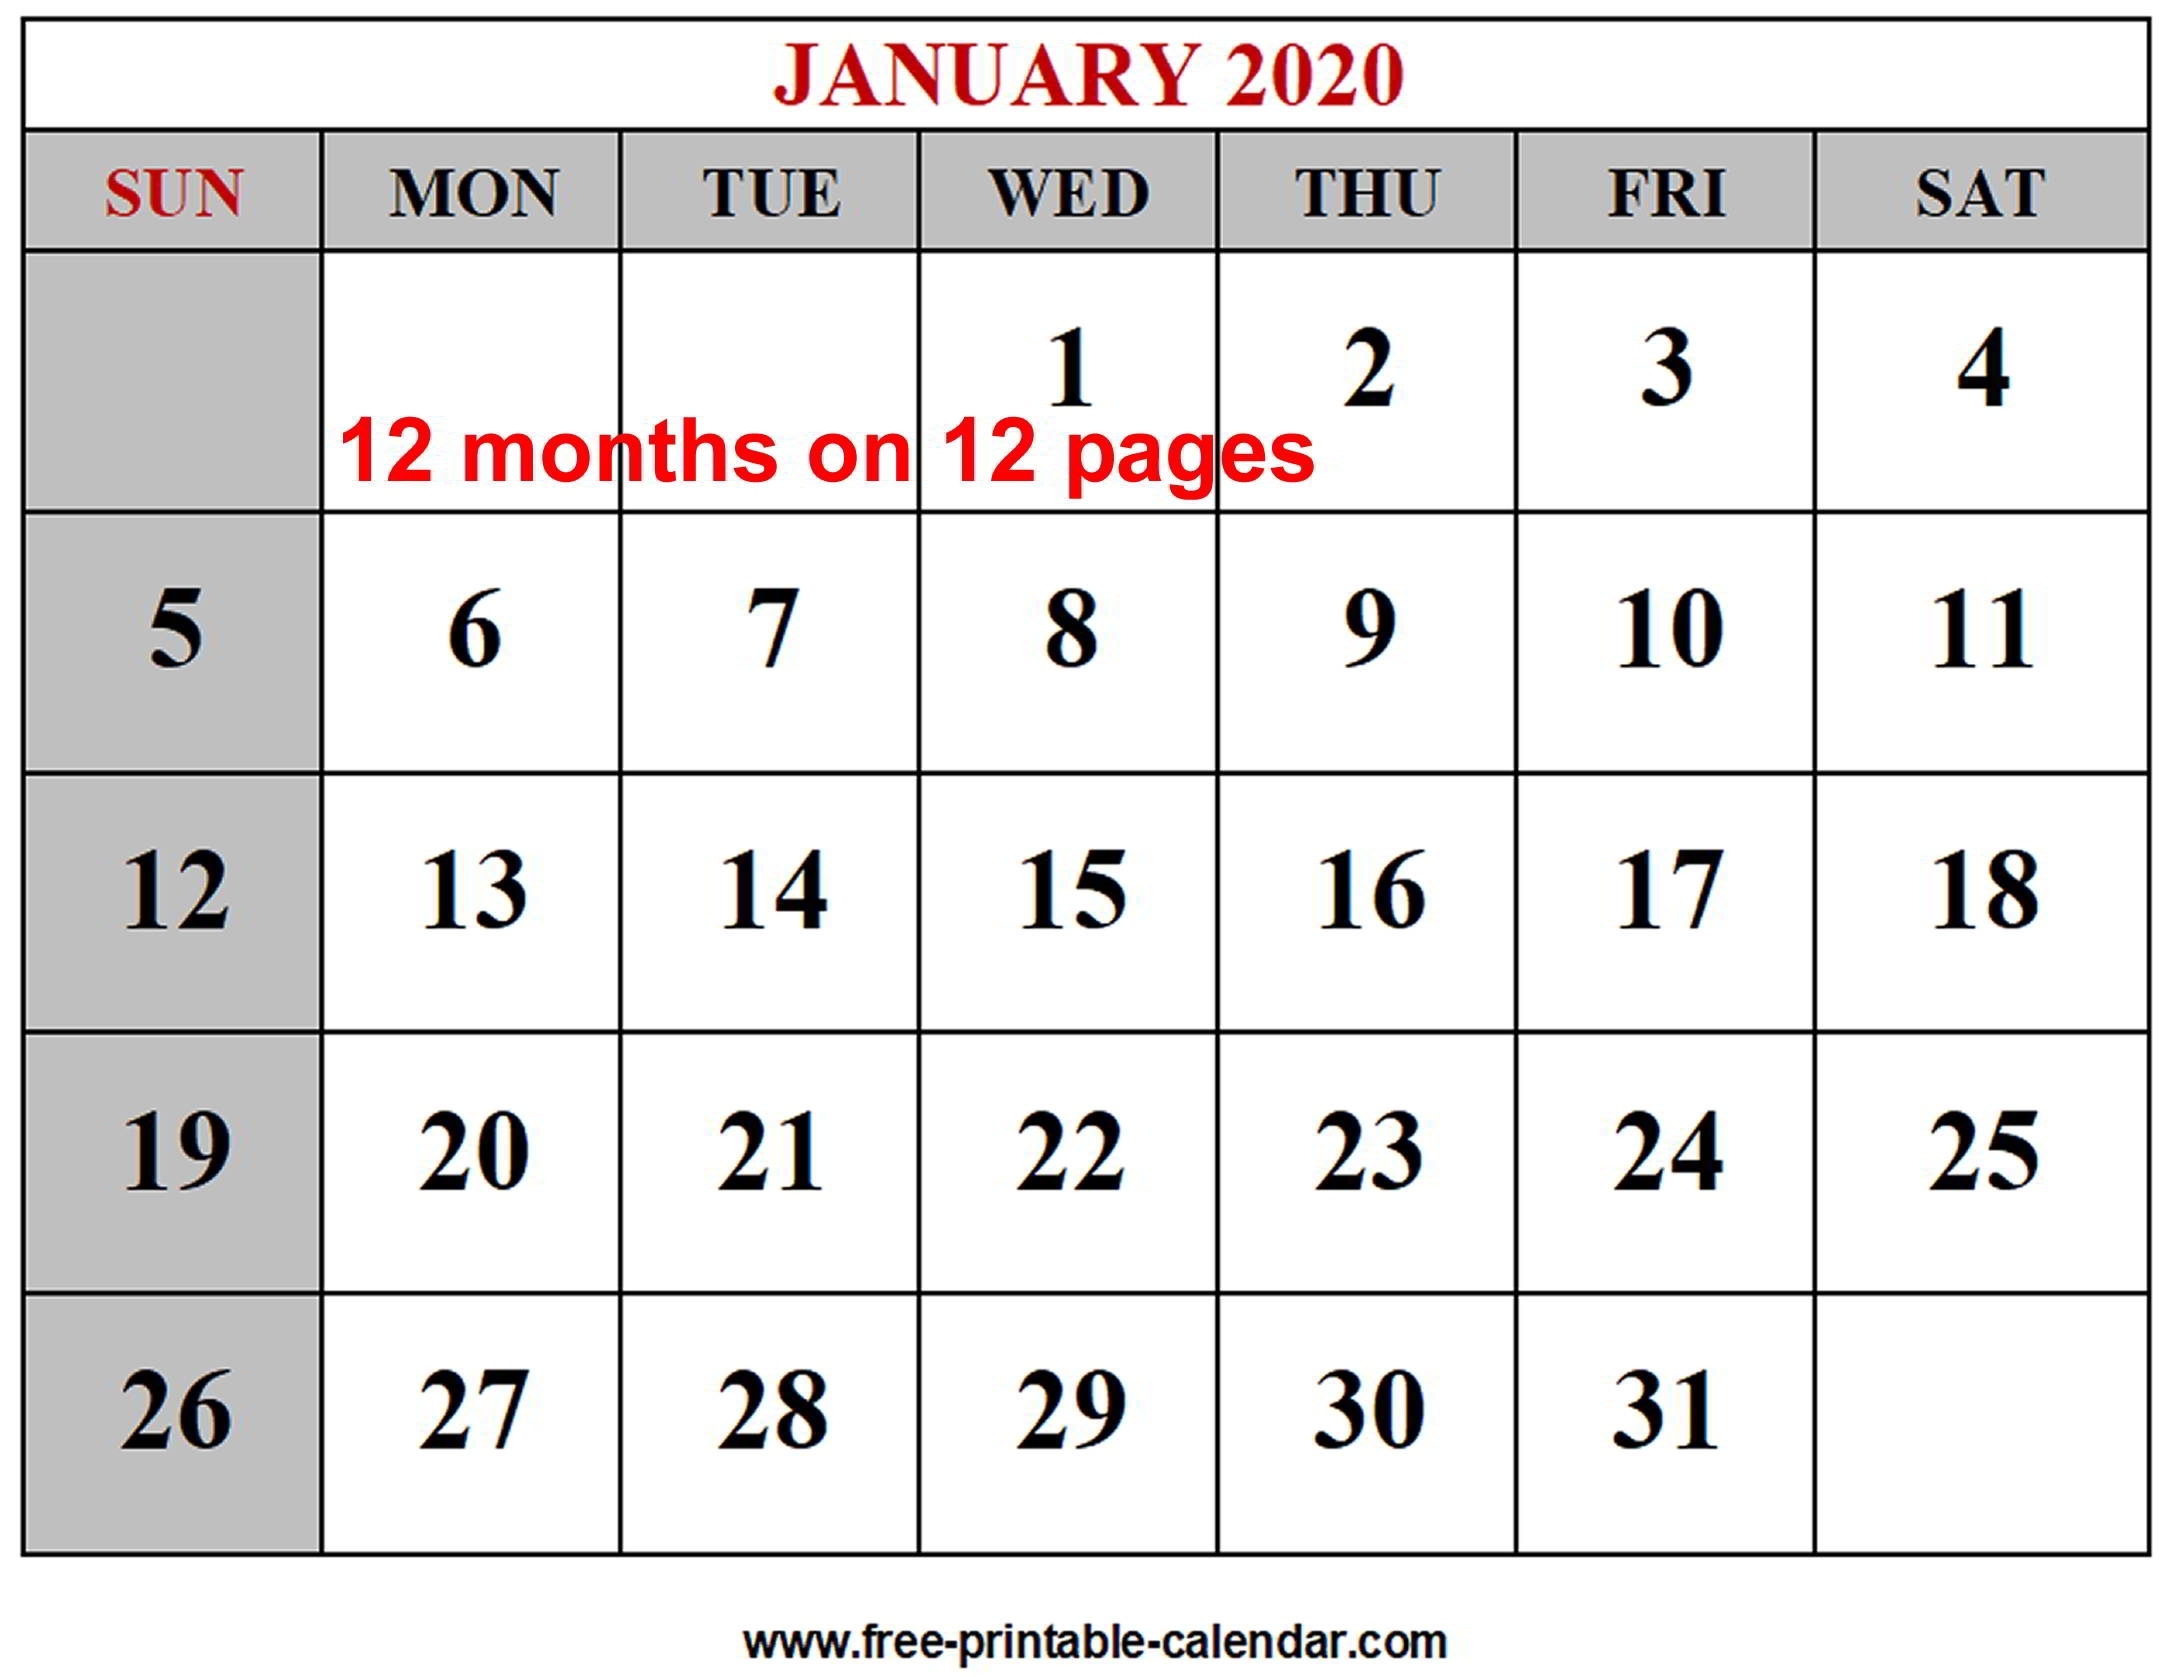 Year 2020 Calendar Templates - Free-Printable-Calendar Microsoft Word 2020 Monthly Calendar Template